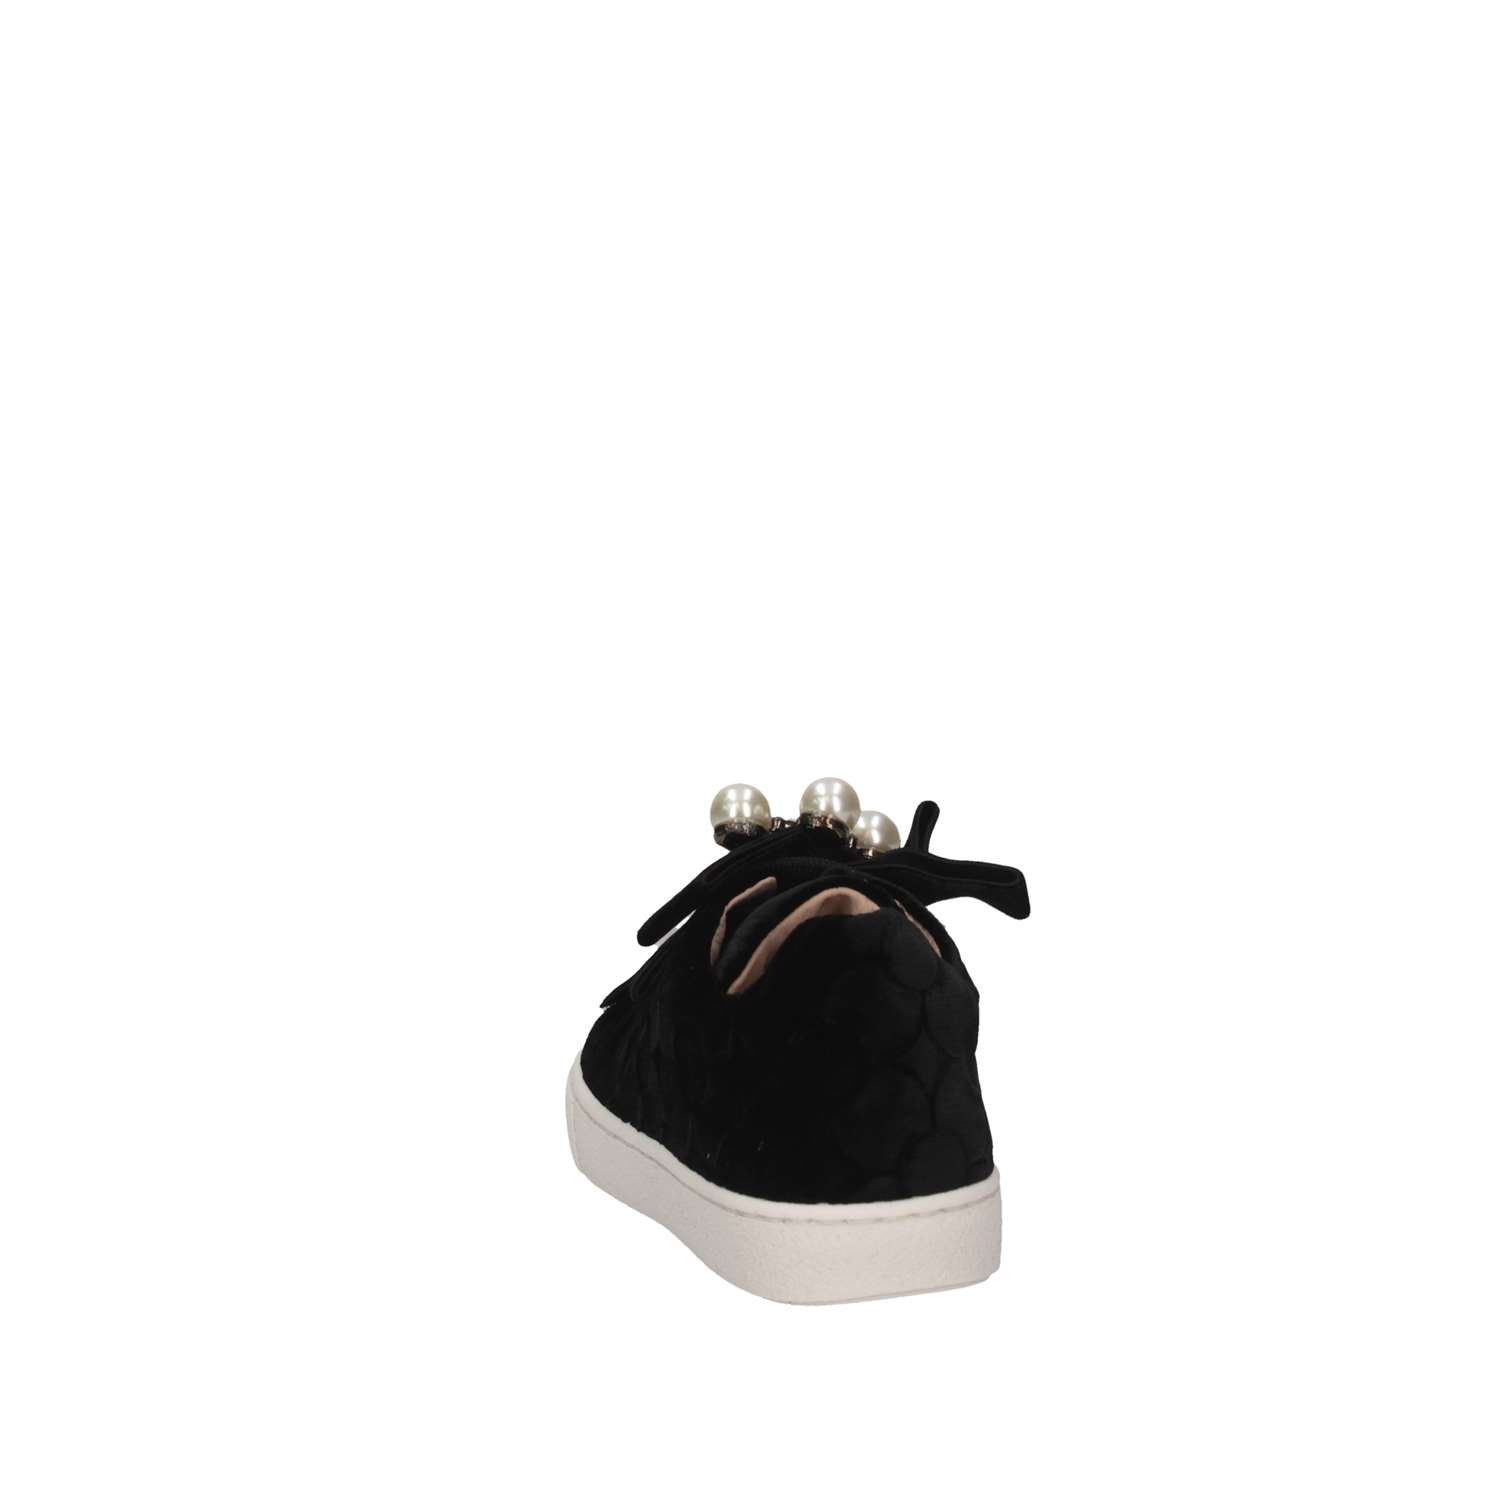 Florens F668142V NERO Black Shoes Child 